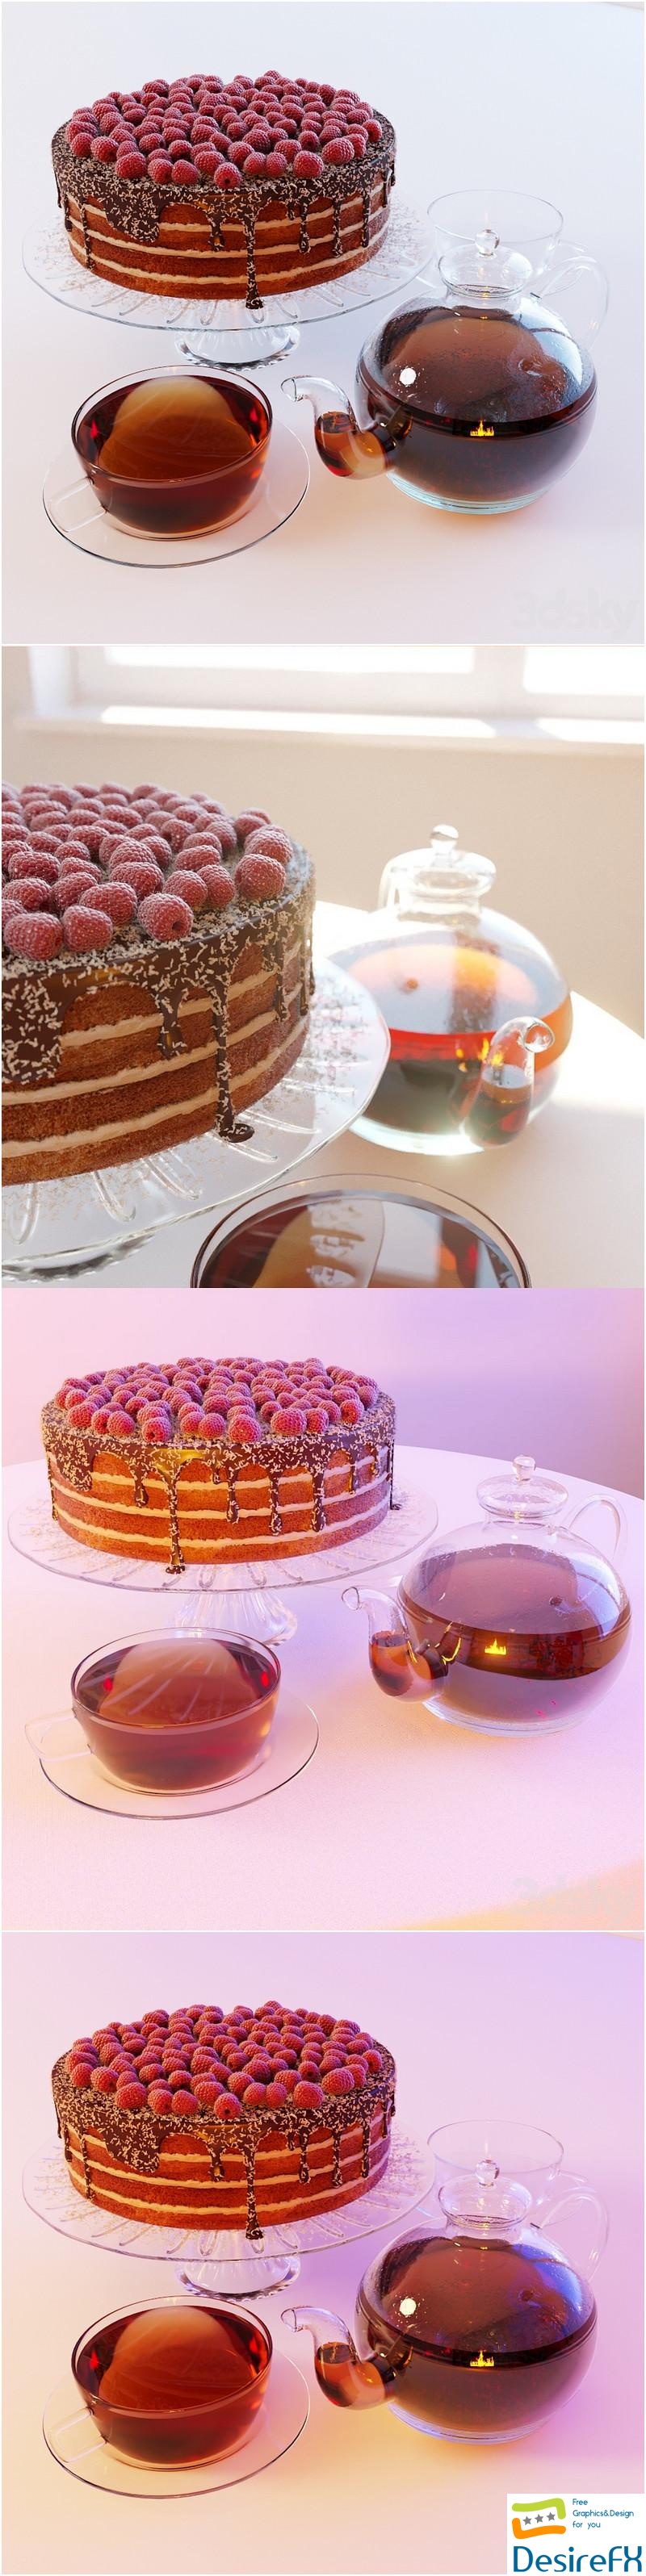 Chocolate cake & tea 3D Model